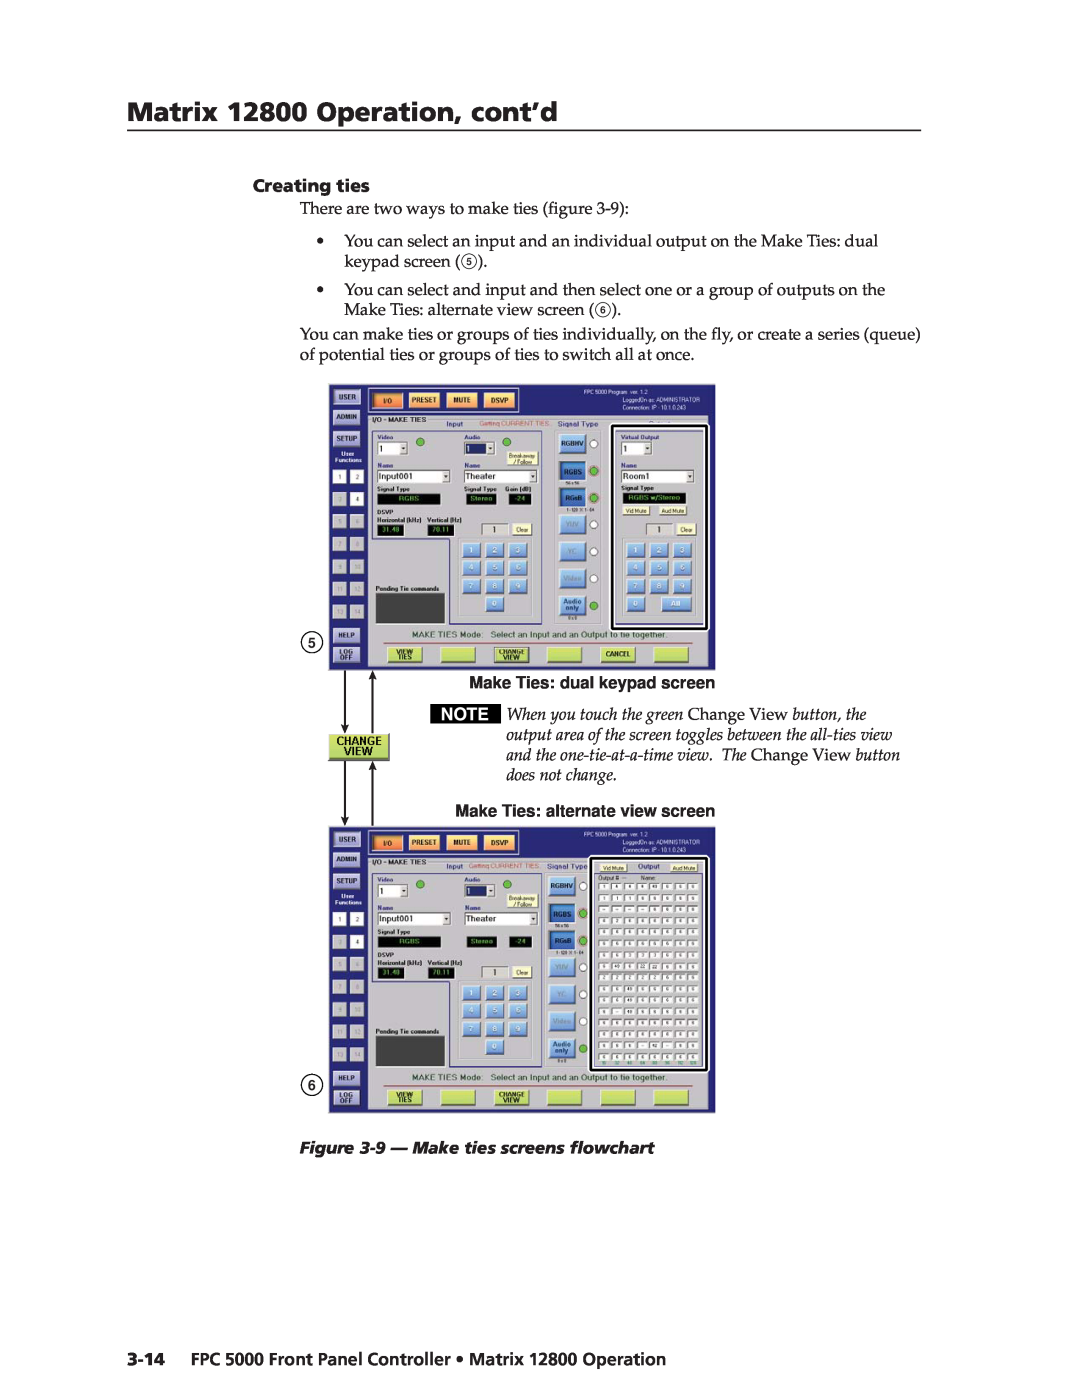 Extron electronic FPC 5000 manual Creating ties, Make Ties dual keypad screen, Make Ties alternate view screen 